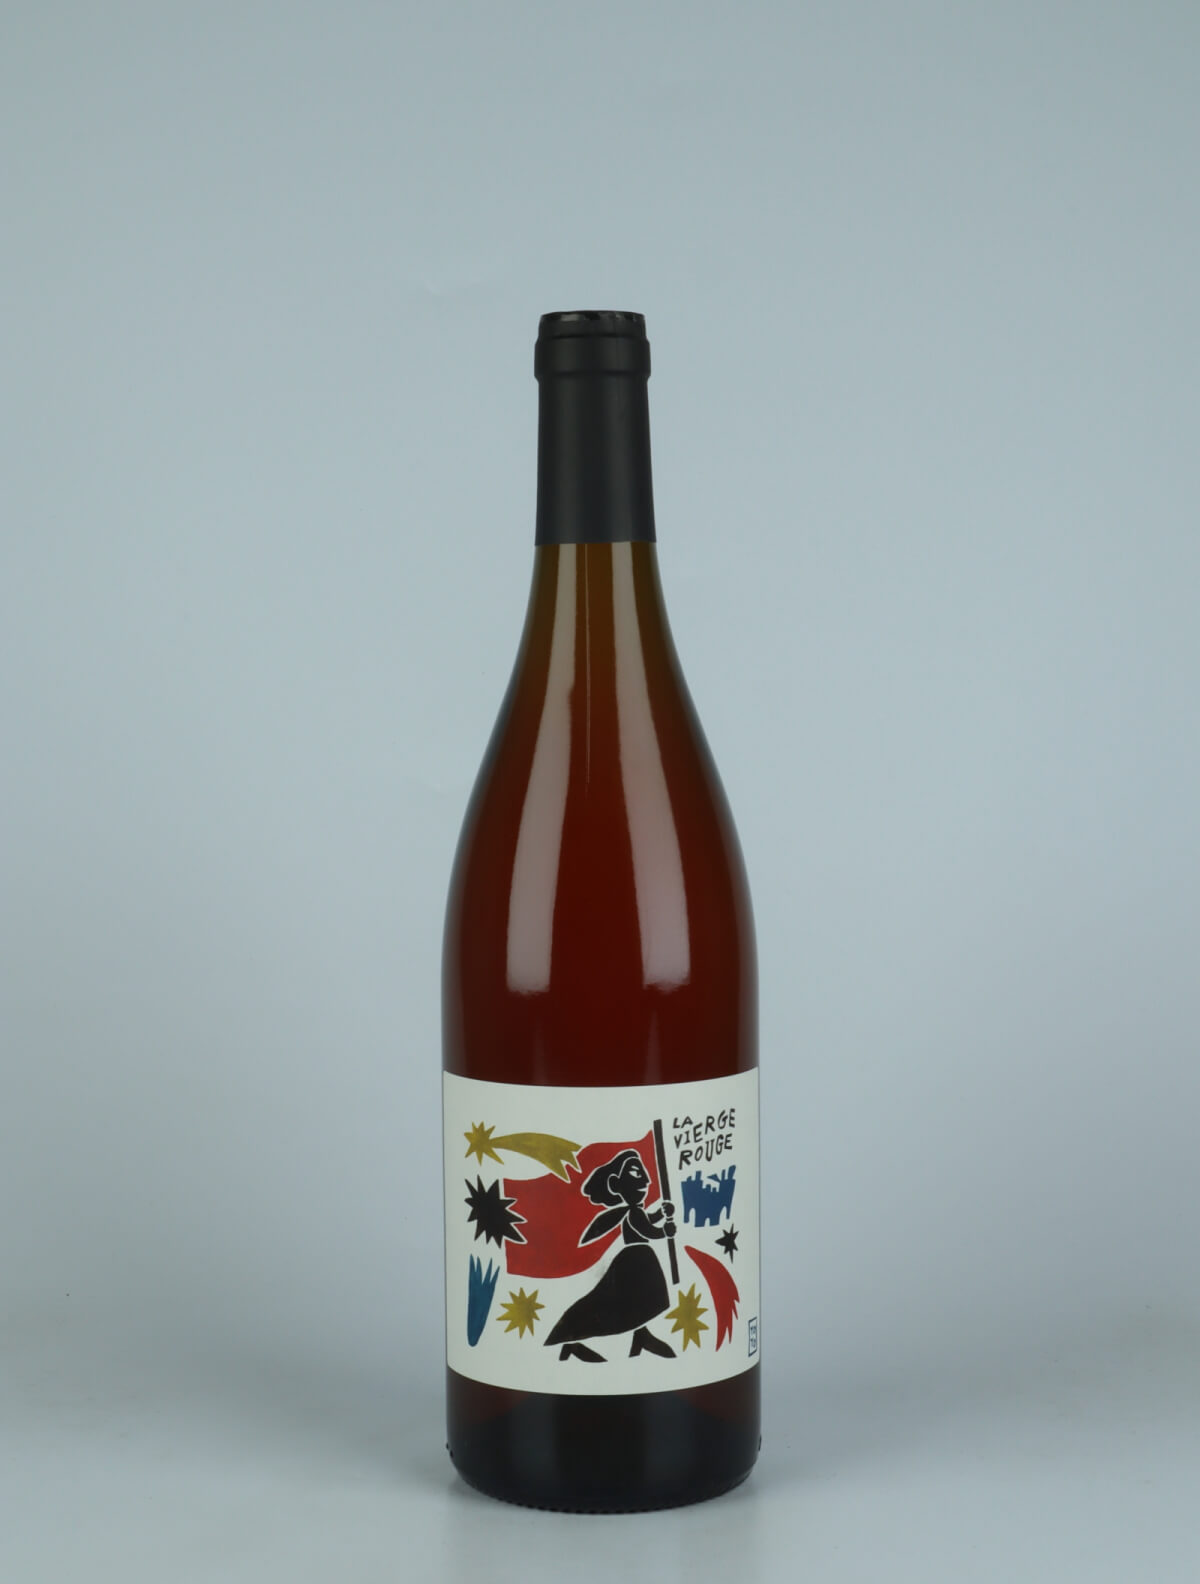 A bottle 2023 La Vierge Rouge Orange wine from Domaine Yoyo, Rousillon in France